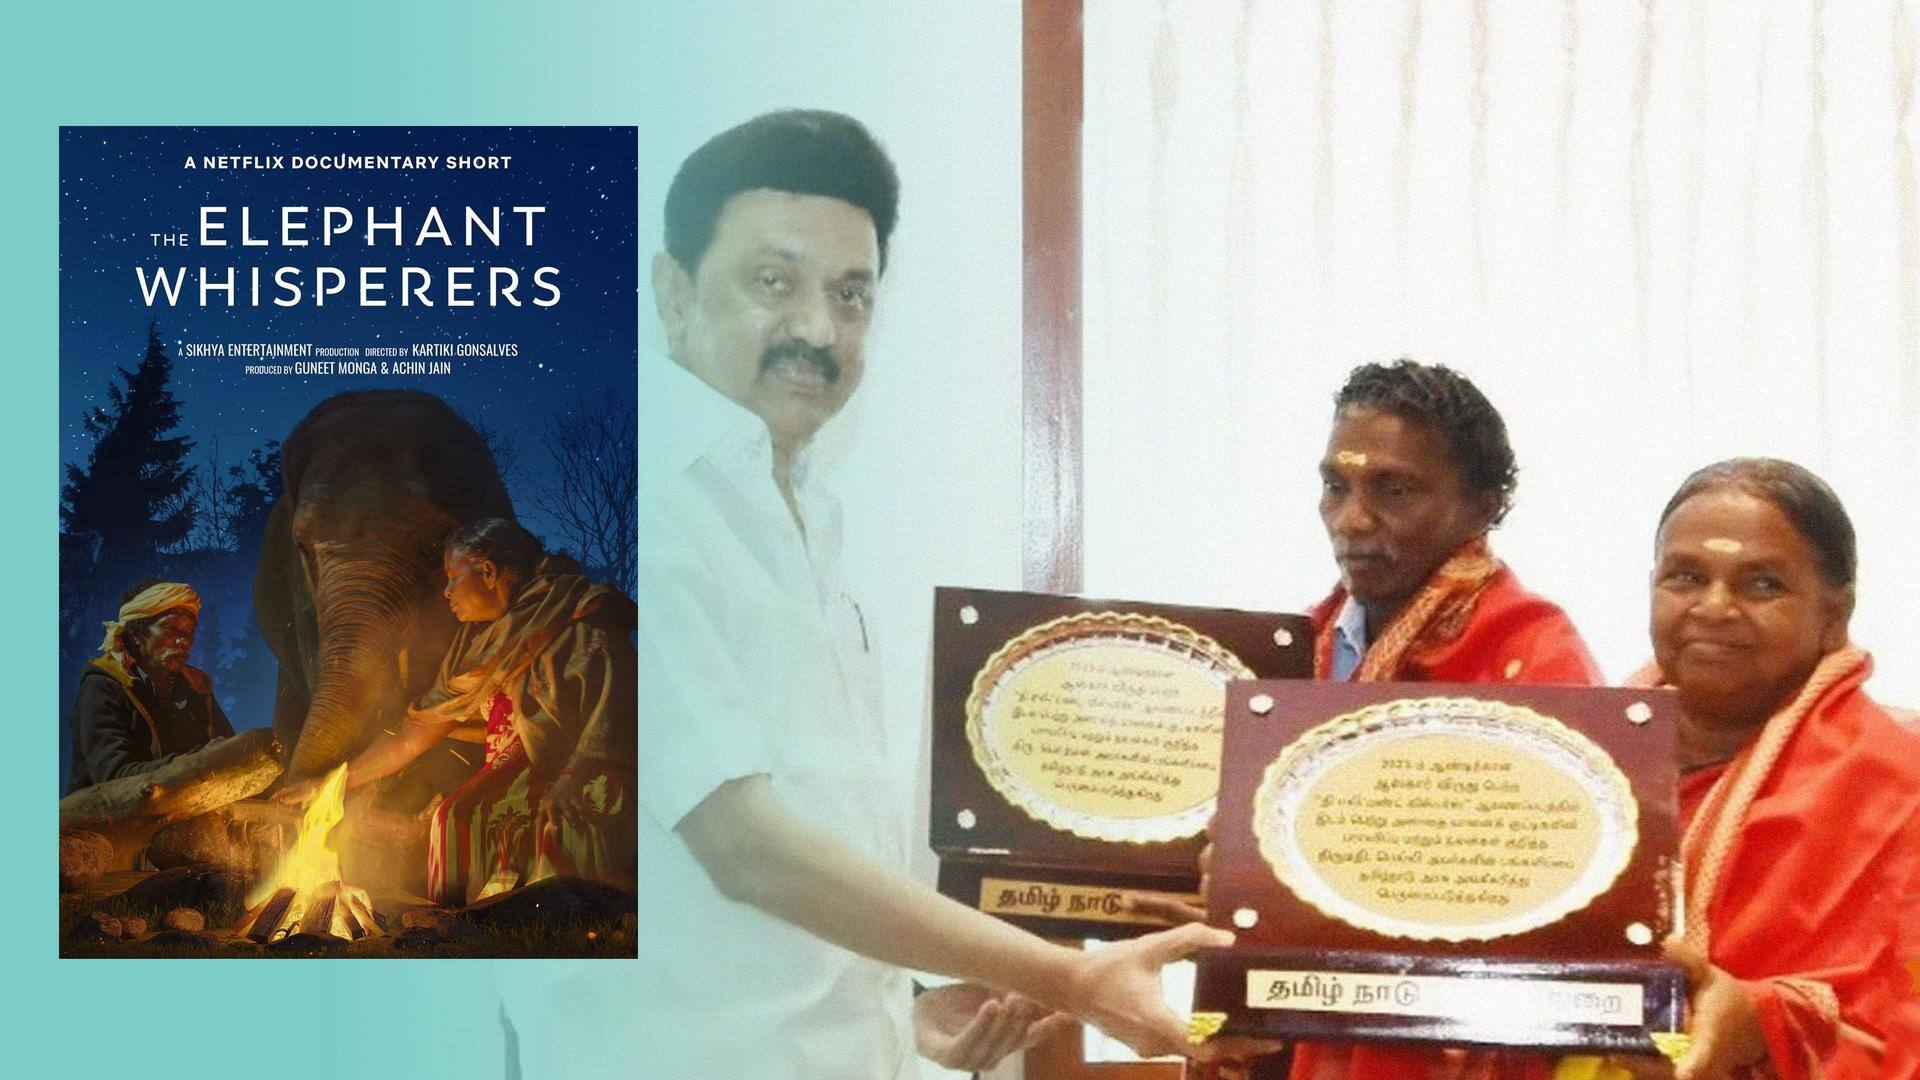 Tamil Nadu: CM MK Stalin felicitates 'The Elephant Whisperers' caretakers